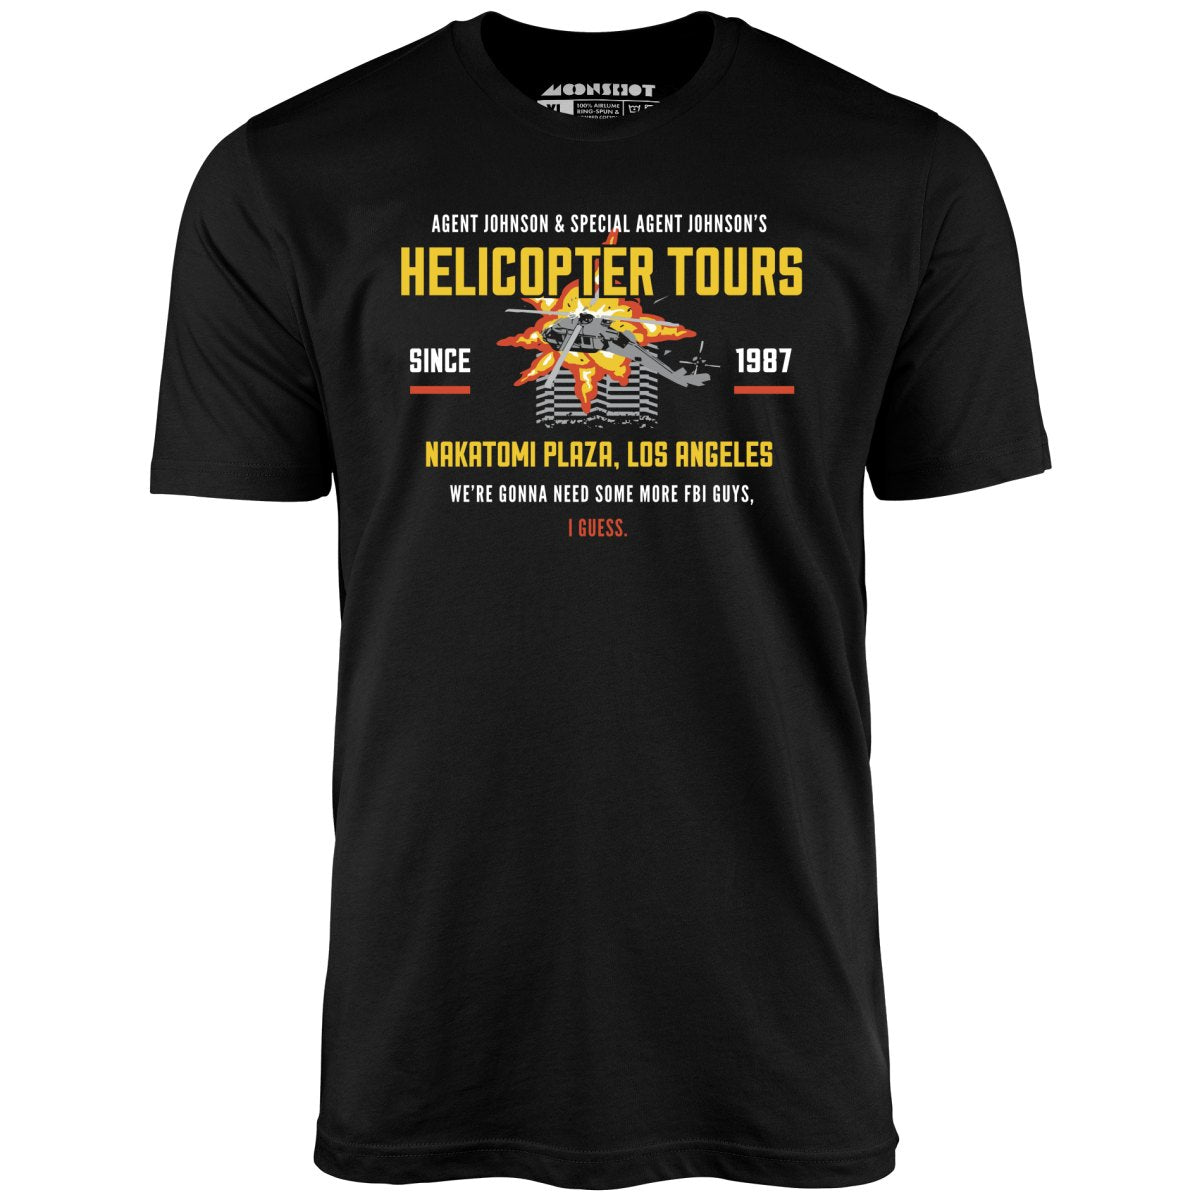 Agent Johnson & Johnson's Helicopter Tours - Die Hard - Unisex T-Shirt